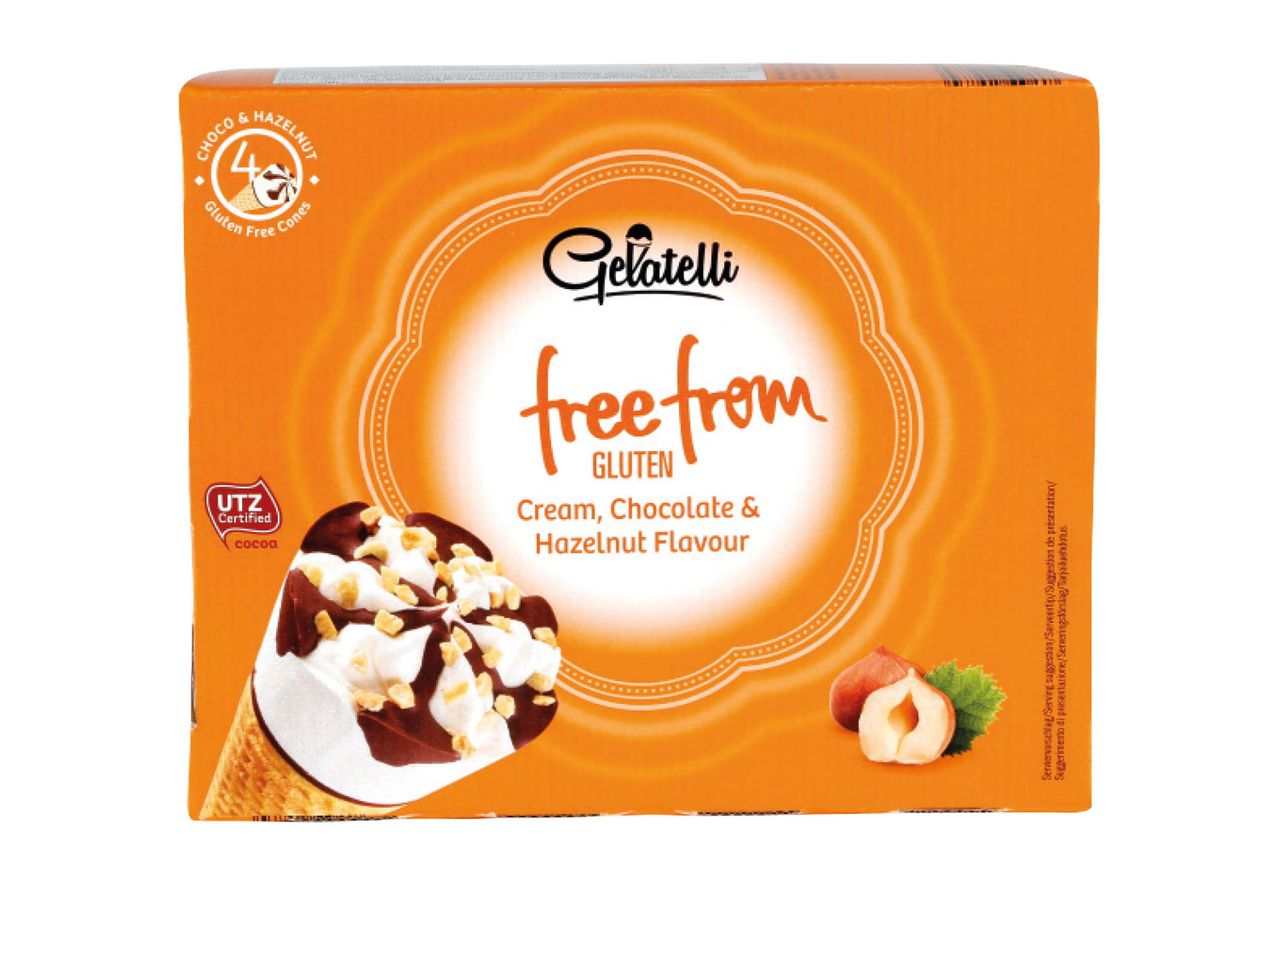 Go to full screen view: Gluten Free Ice Cream - Image 1